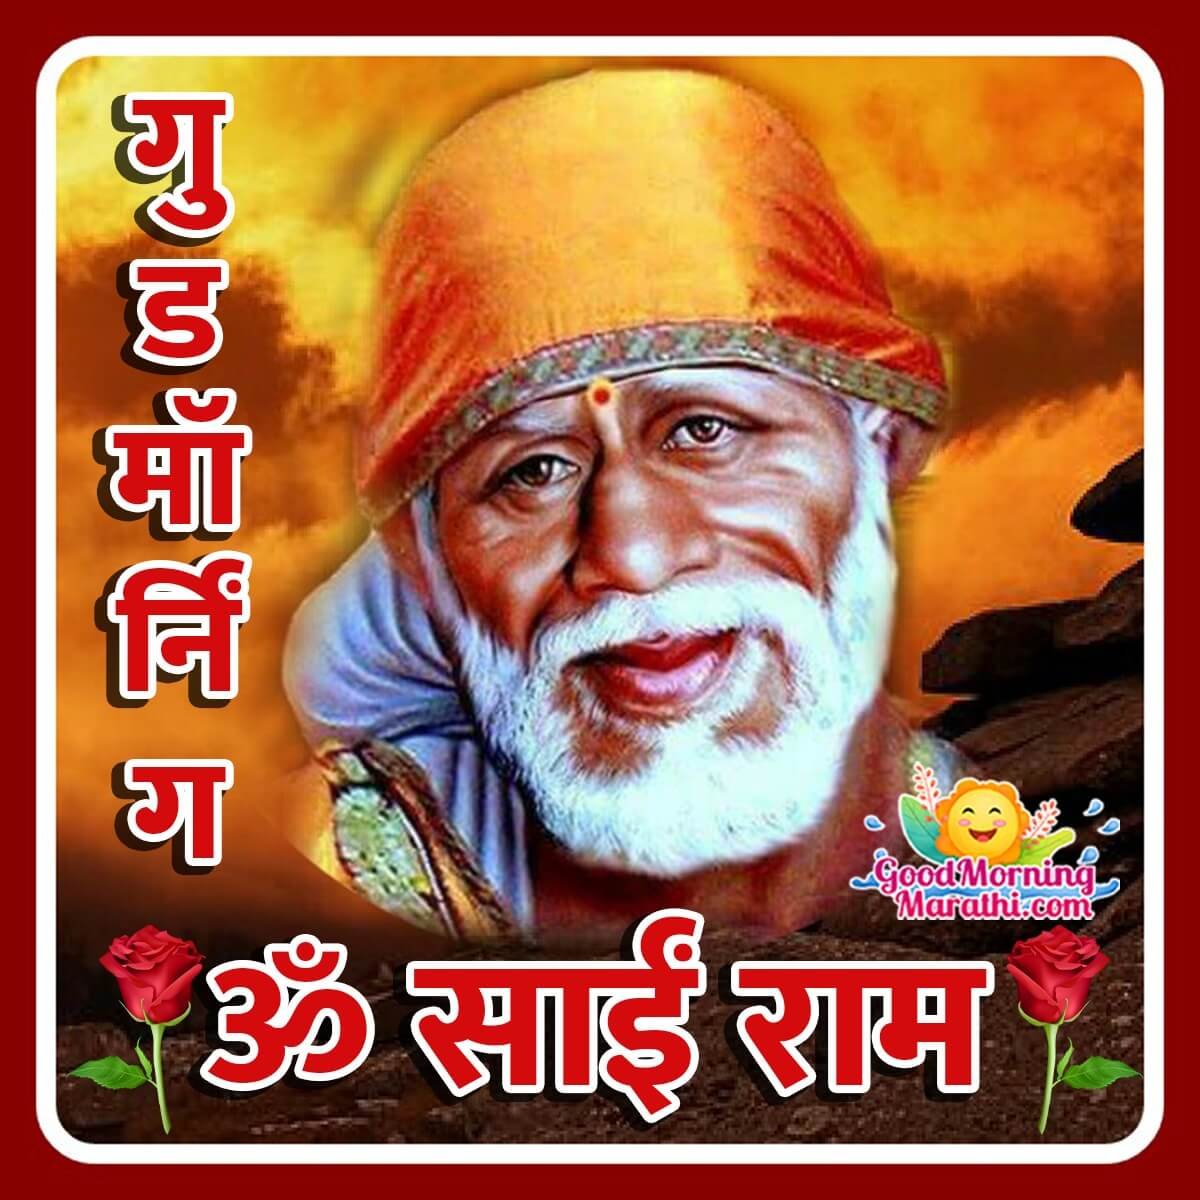 Good Morning Sai Baba Images In Marathi - Good Morning Wishes ...